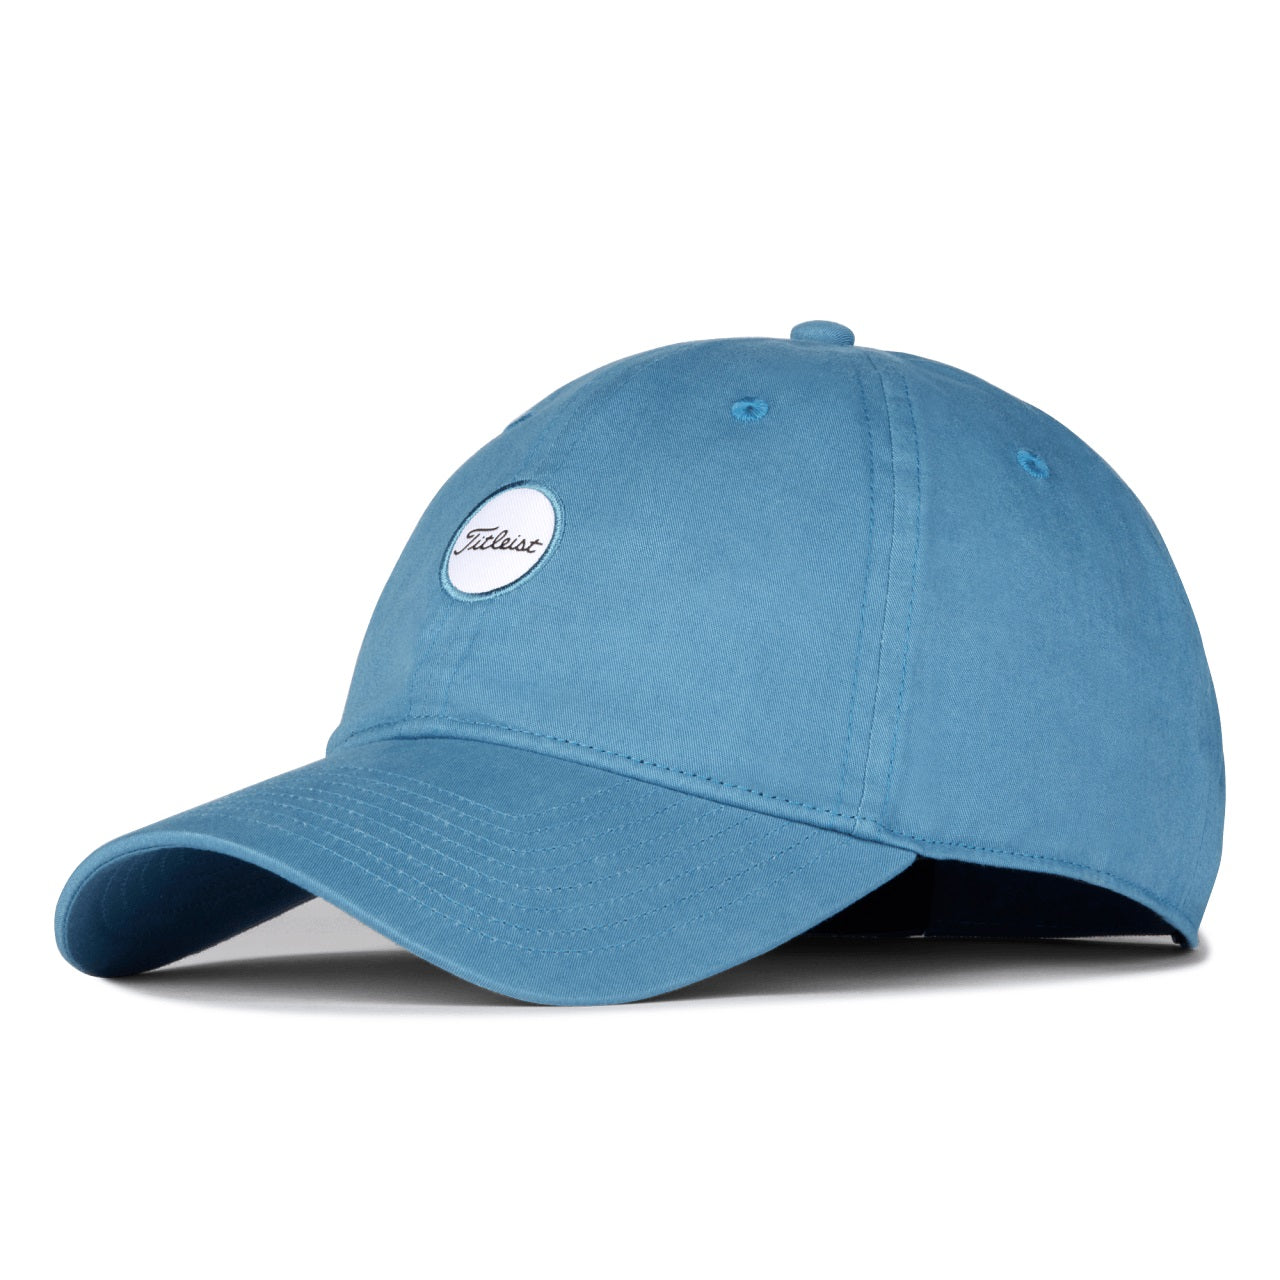 Titleist Montauk Lightweight Adjustable Hat